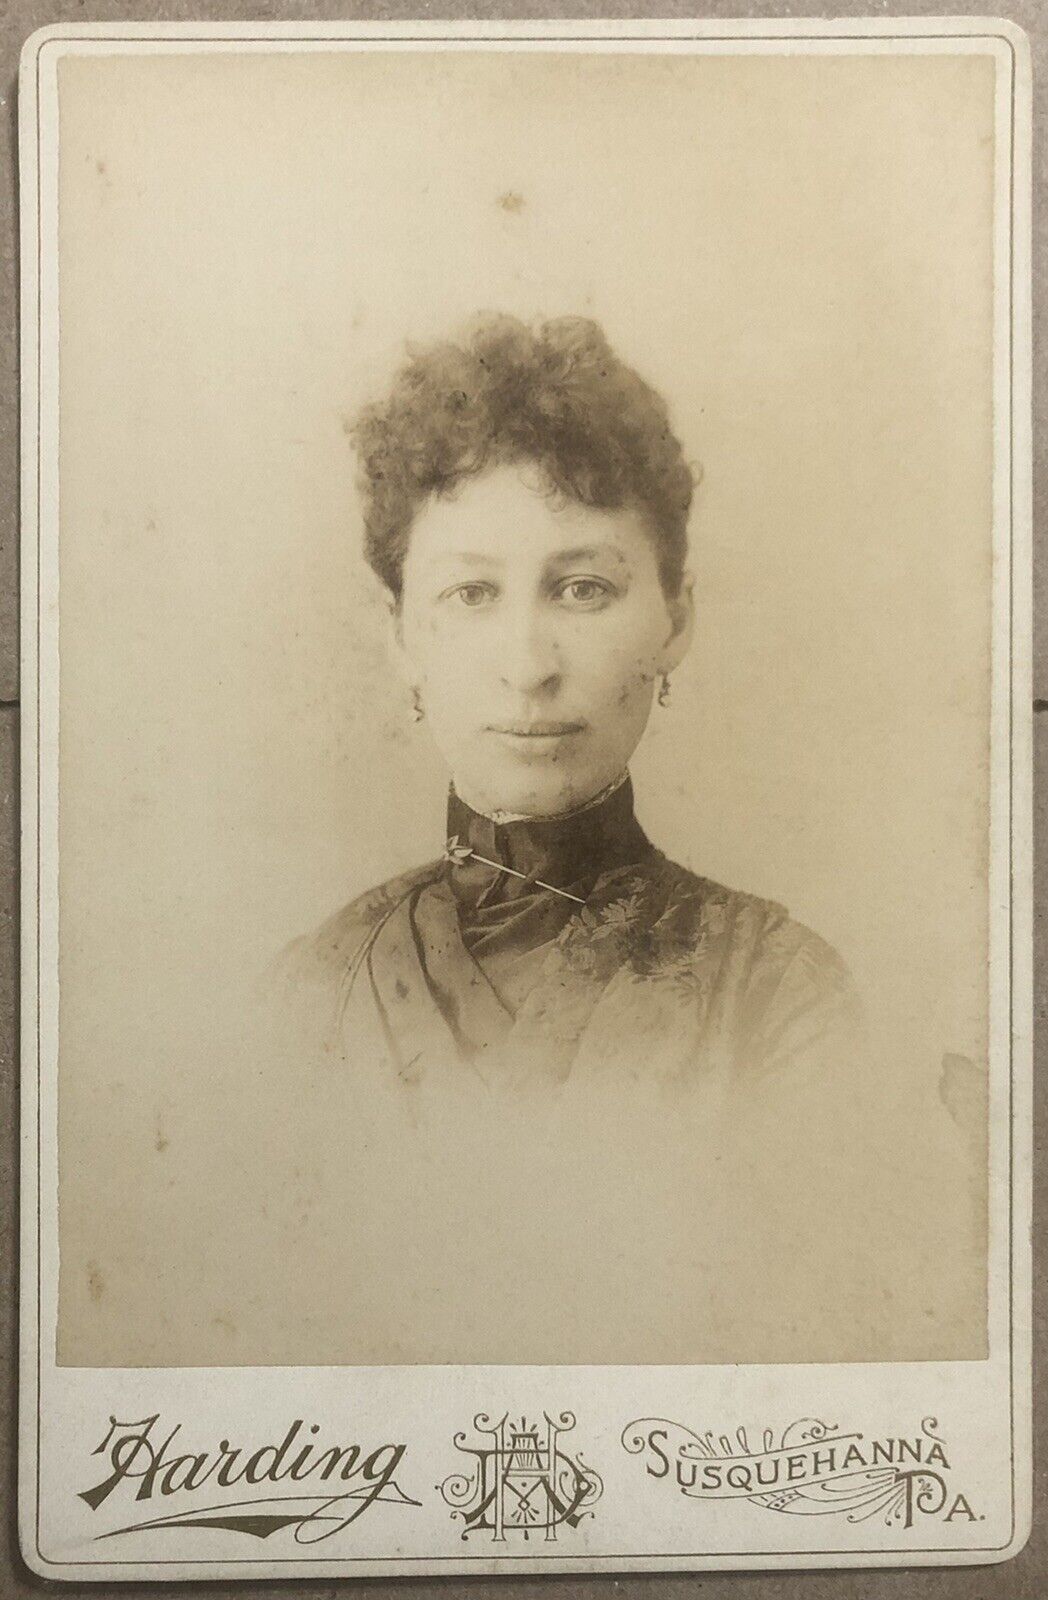 Antique Photo Cabinet Card 6.5x4 c1880 - Carrie B Lyons Shaiff  Susquehanna, PA